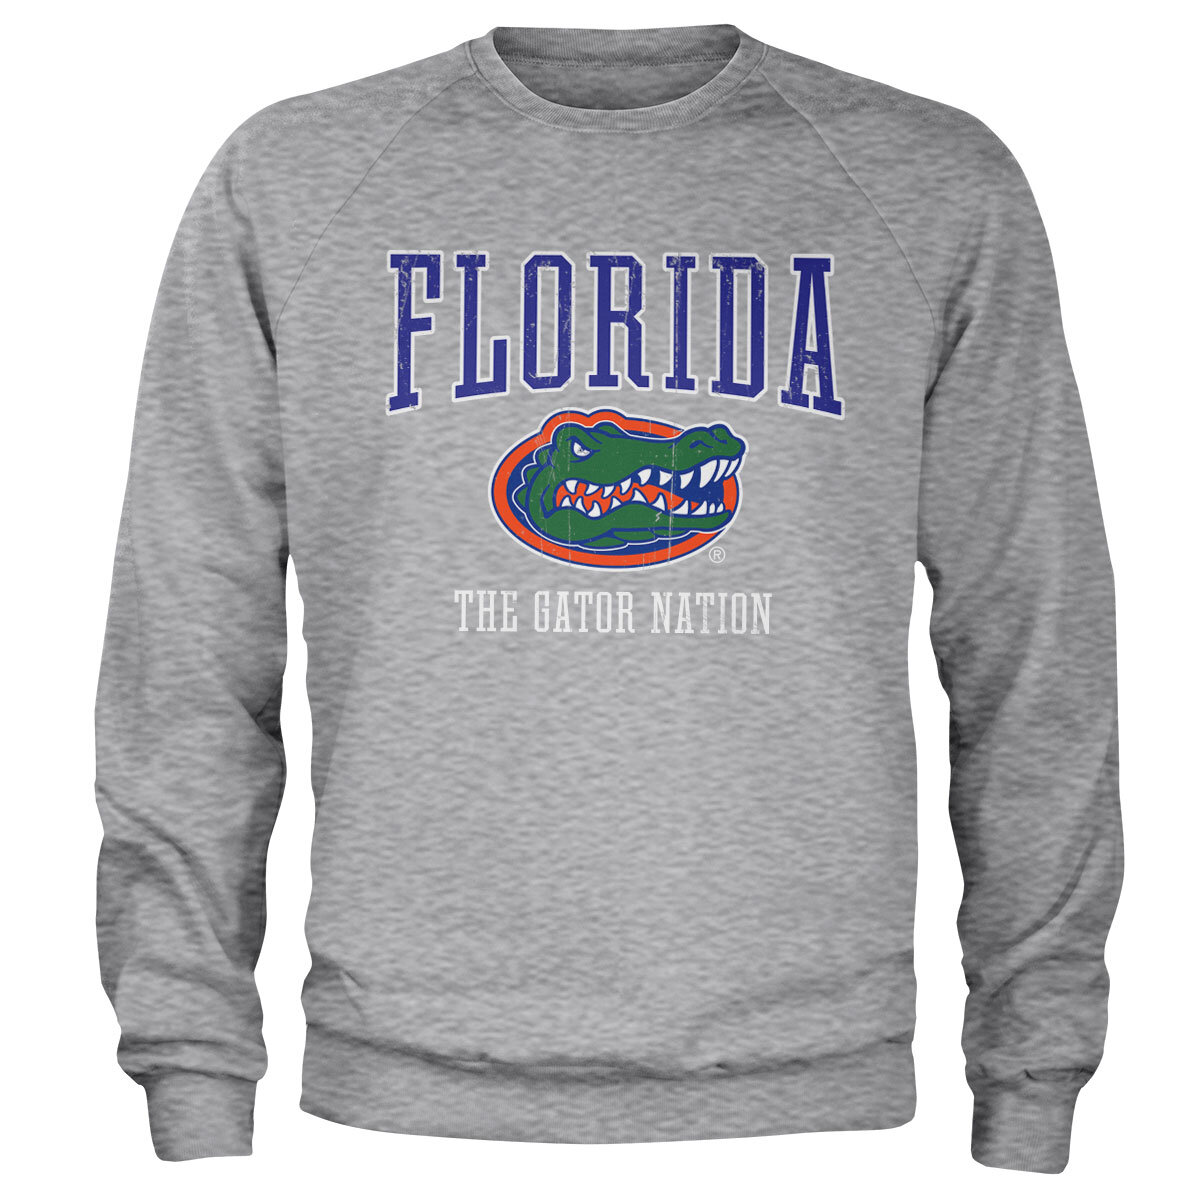 Florida - The Gator Nation Sweatshirt